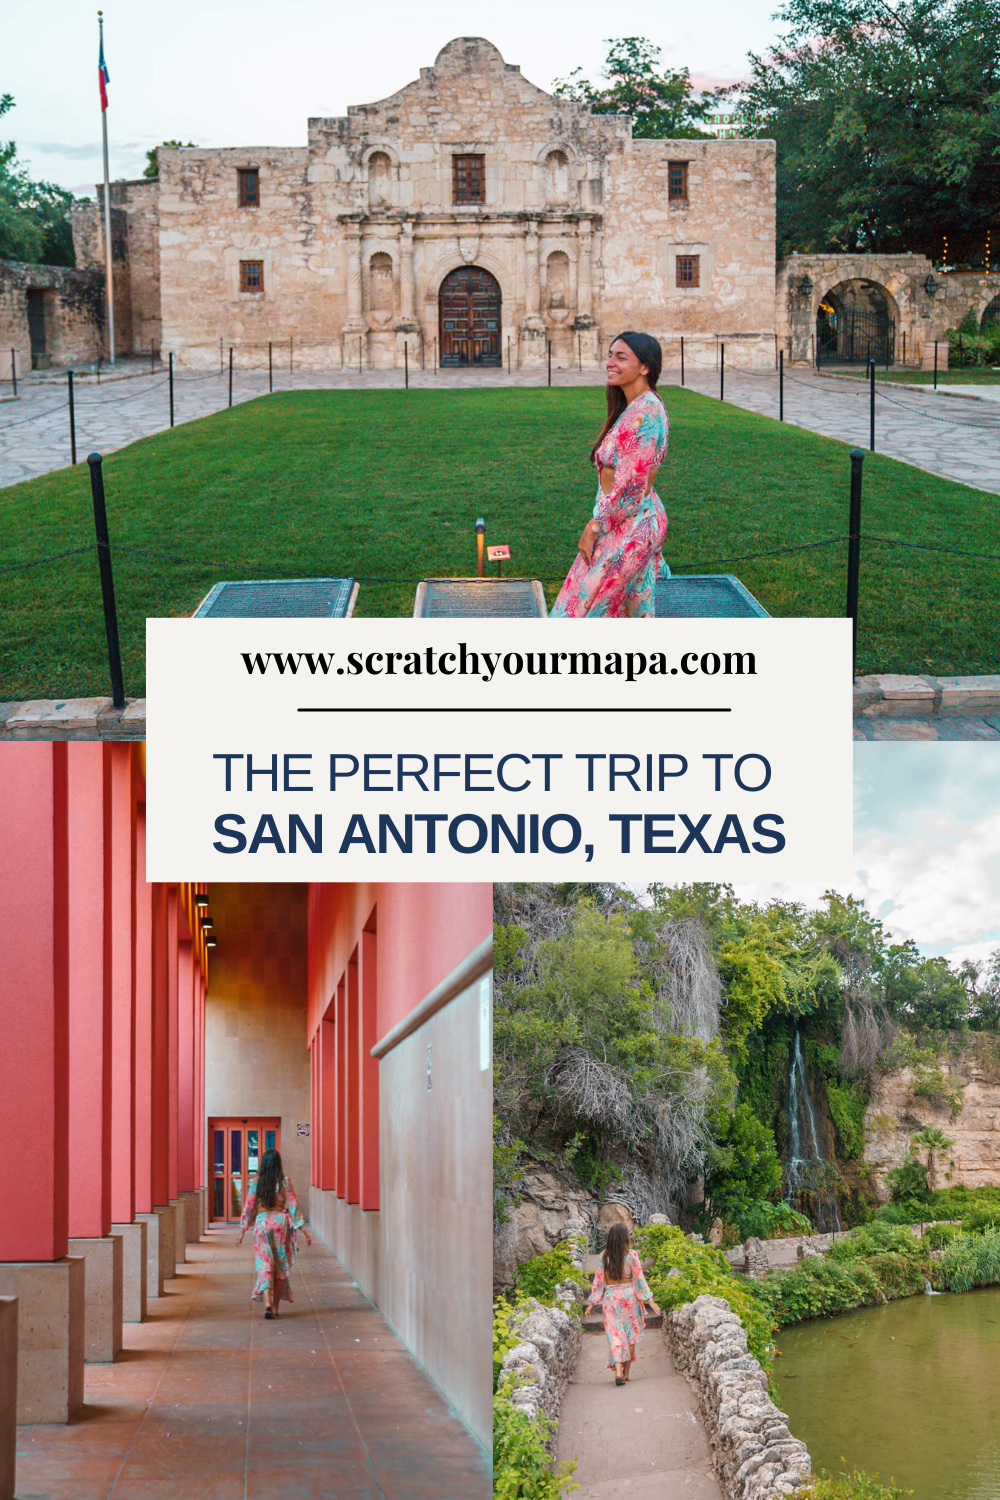 Is San Antonio Texas worth visiting?